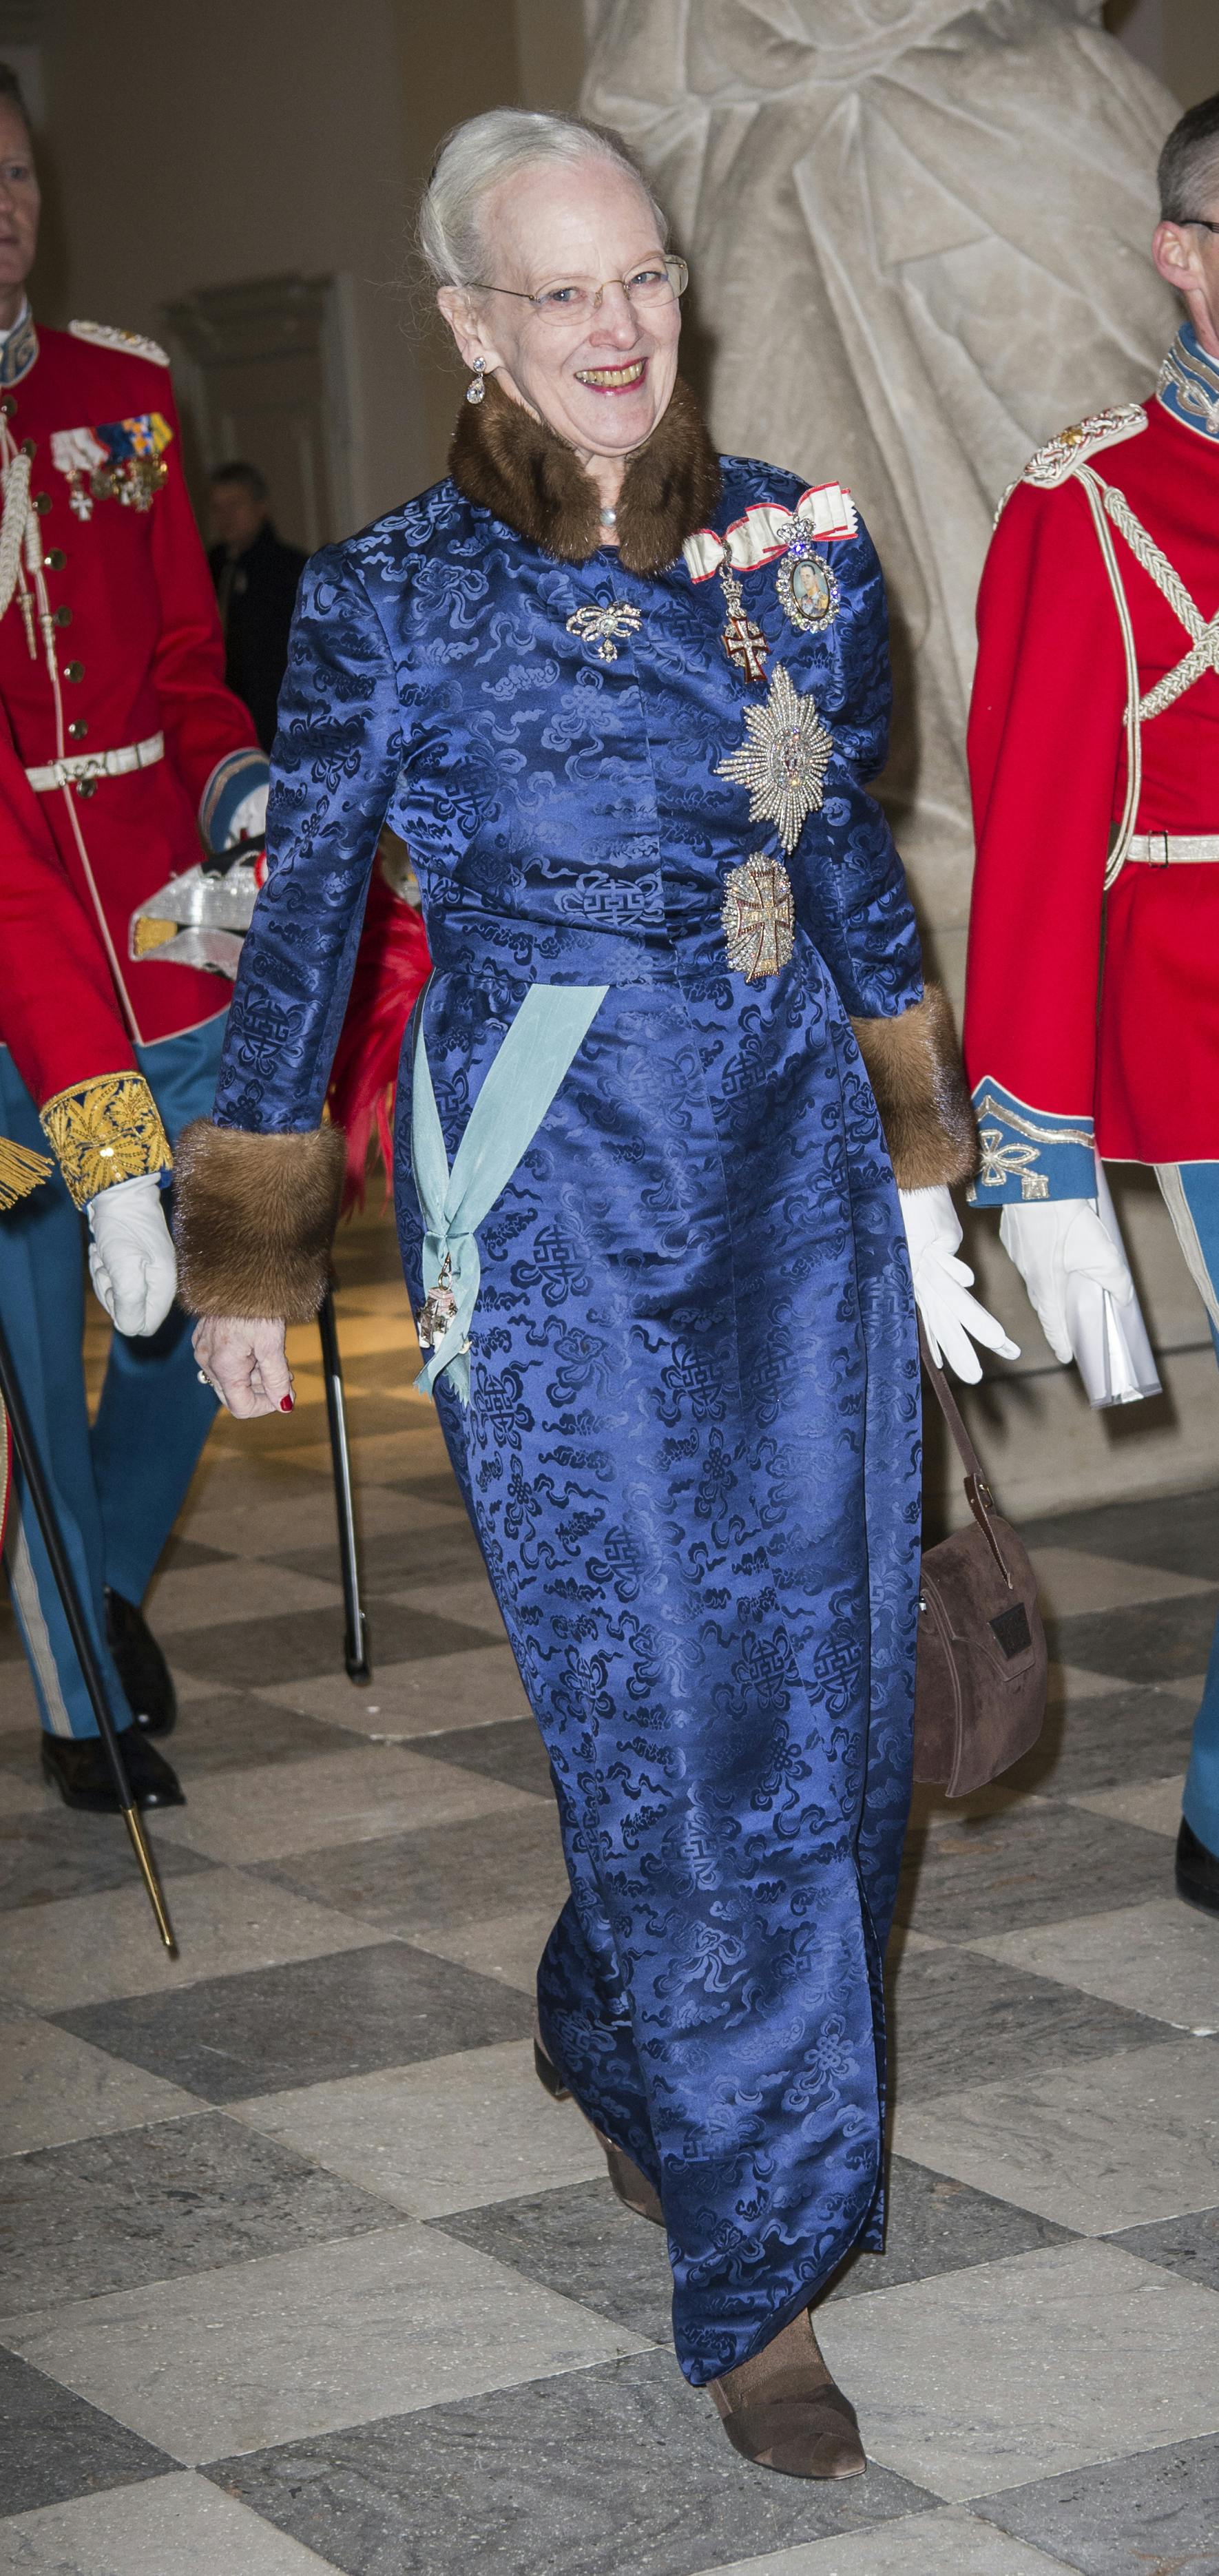 Dronningen afholder nytårskur for det diplomatiske korps på Christiansborg Slot den 5. januar 2016 efter at prins Henrik er gået på pension. Dronningen ankommer alene.  Dronningen bærer den smukke blå brokadekjole kantet med mink, som hun hvert år bærer til de to nytårskure på Christiansborg. Hertil bærer hun elefantordenen. 